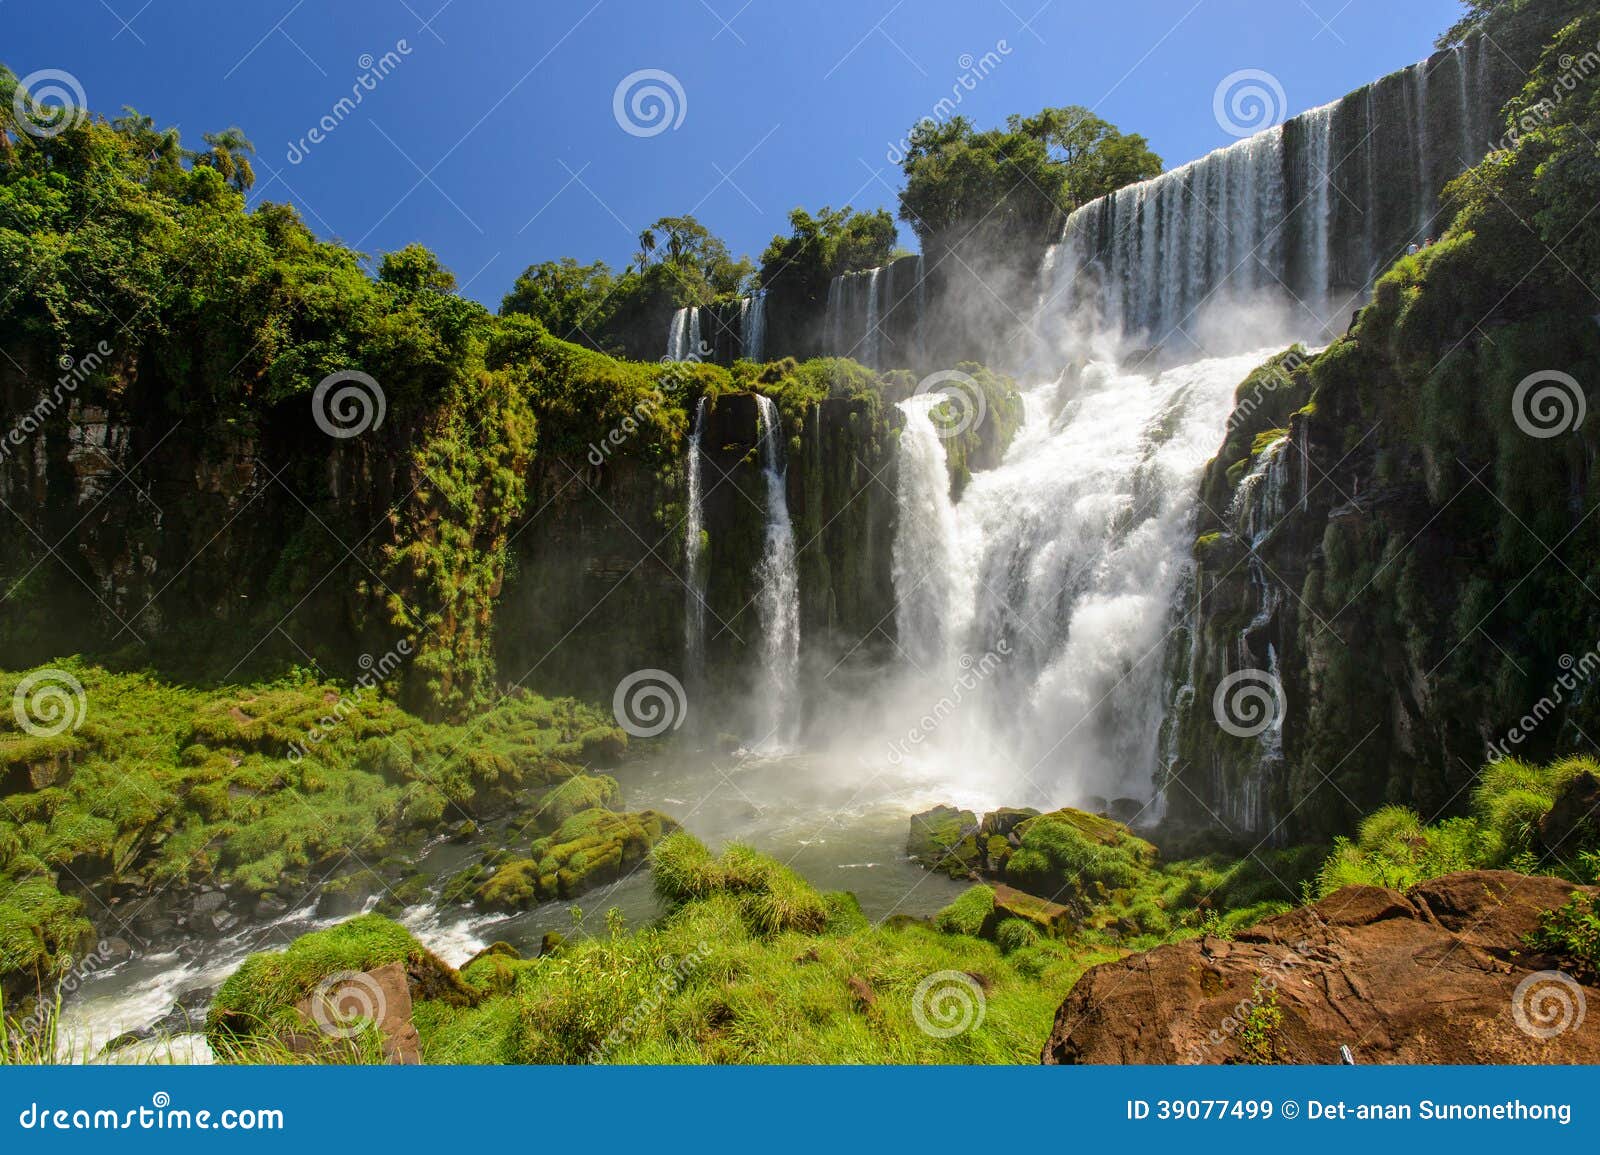 iguazu falls view from argentina